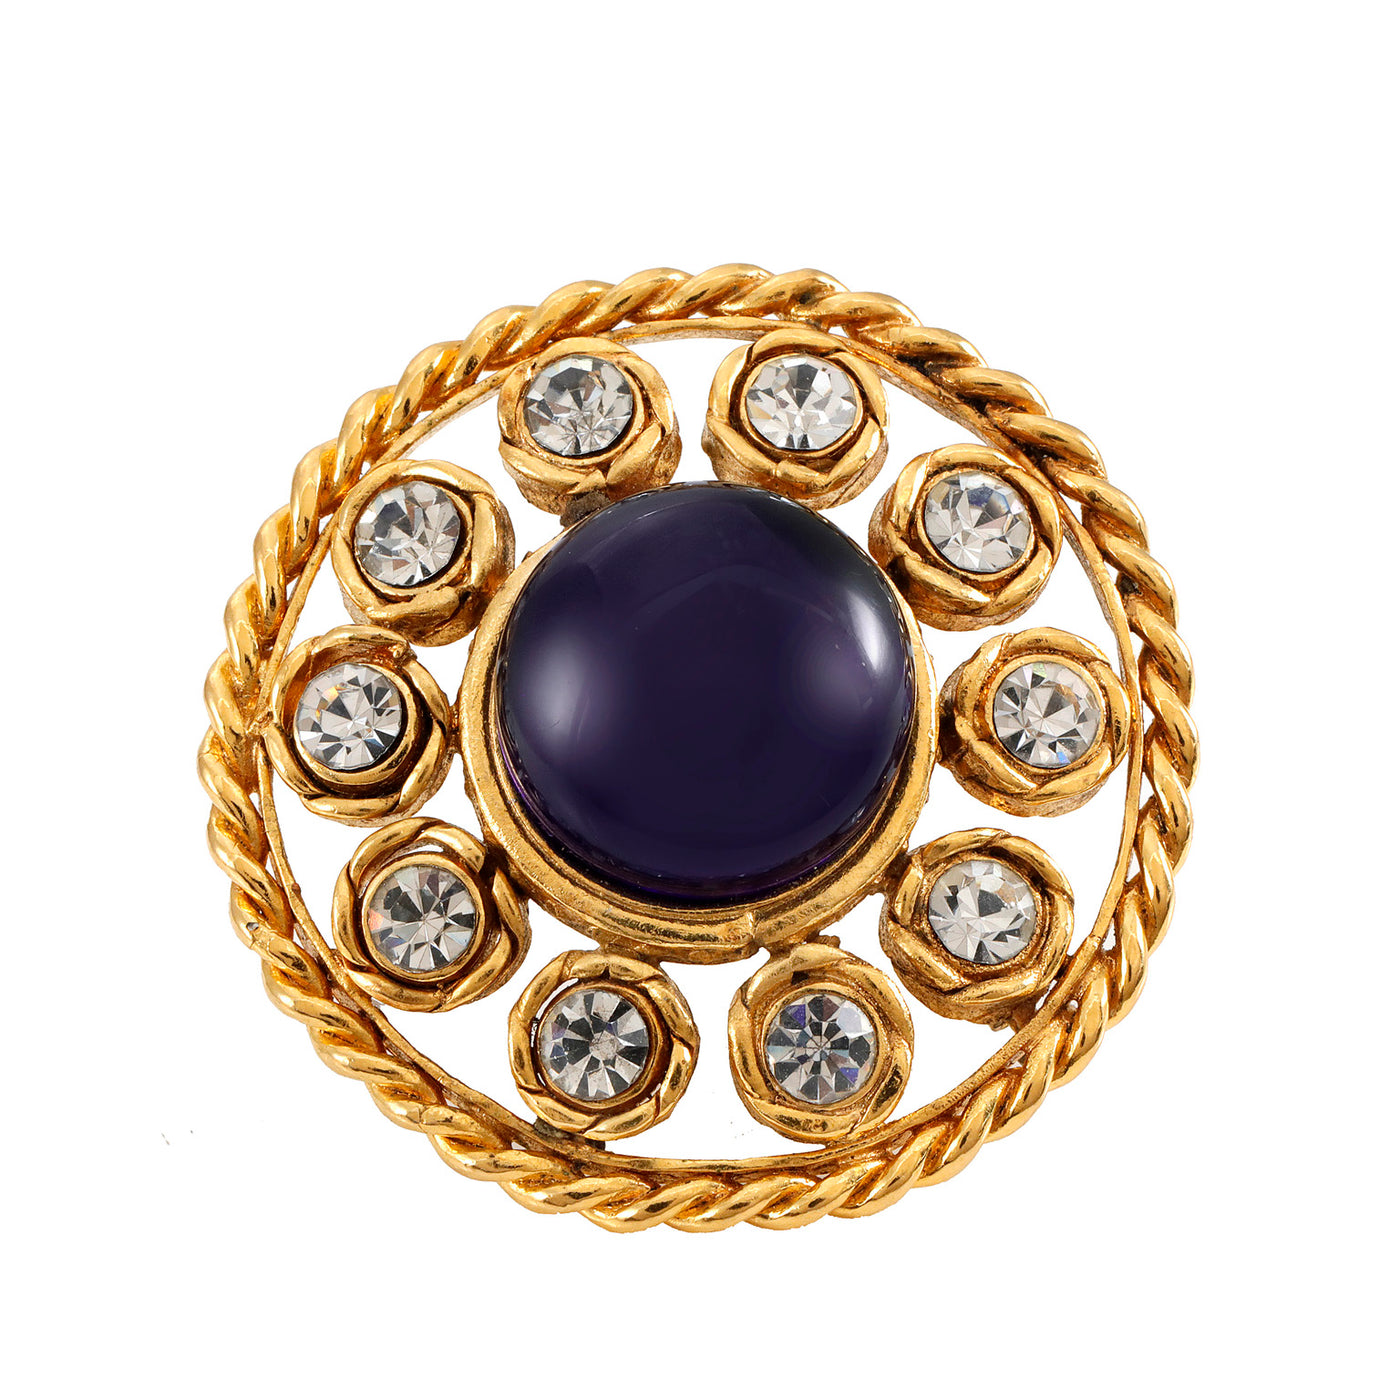 Chanel Blue Gripoix Pin/Pendant w/ Gold Hardware